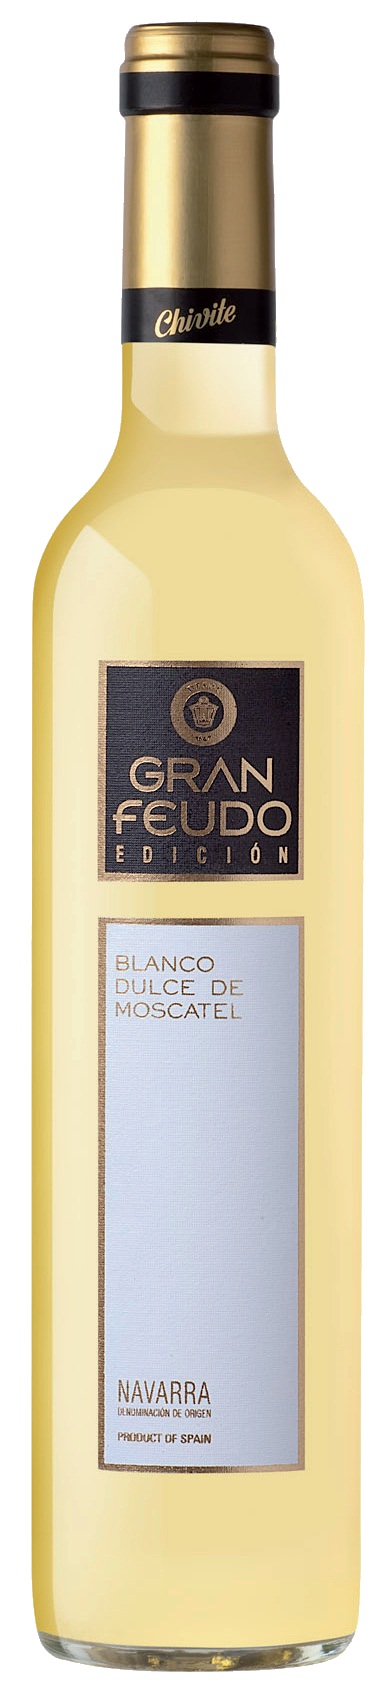 Image of Wine bottle Gran Feudo Chivite Blanco de Moscatel